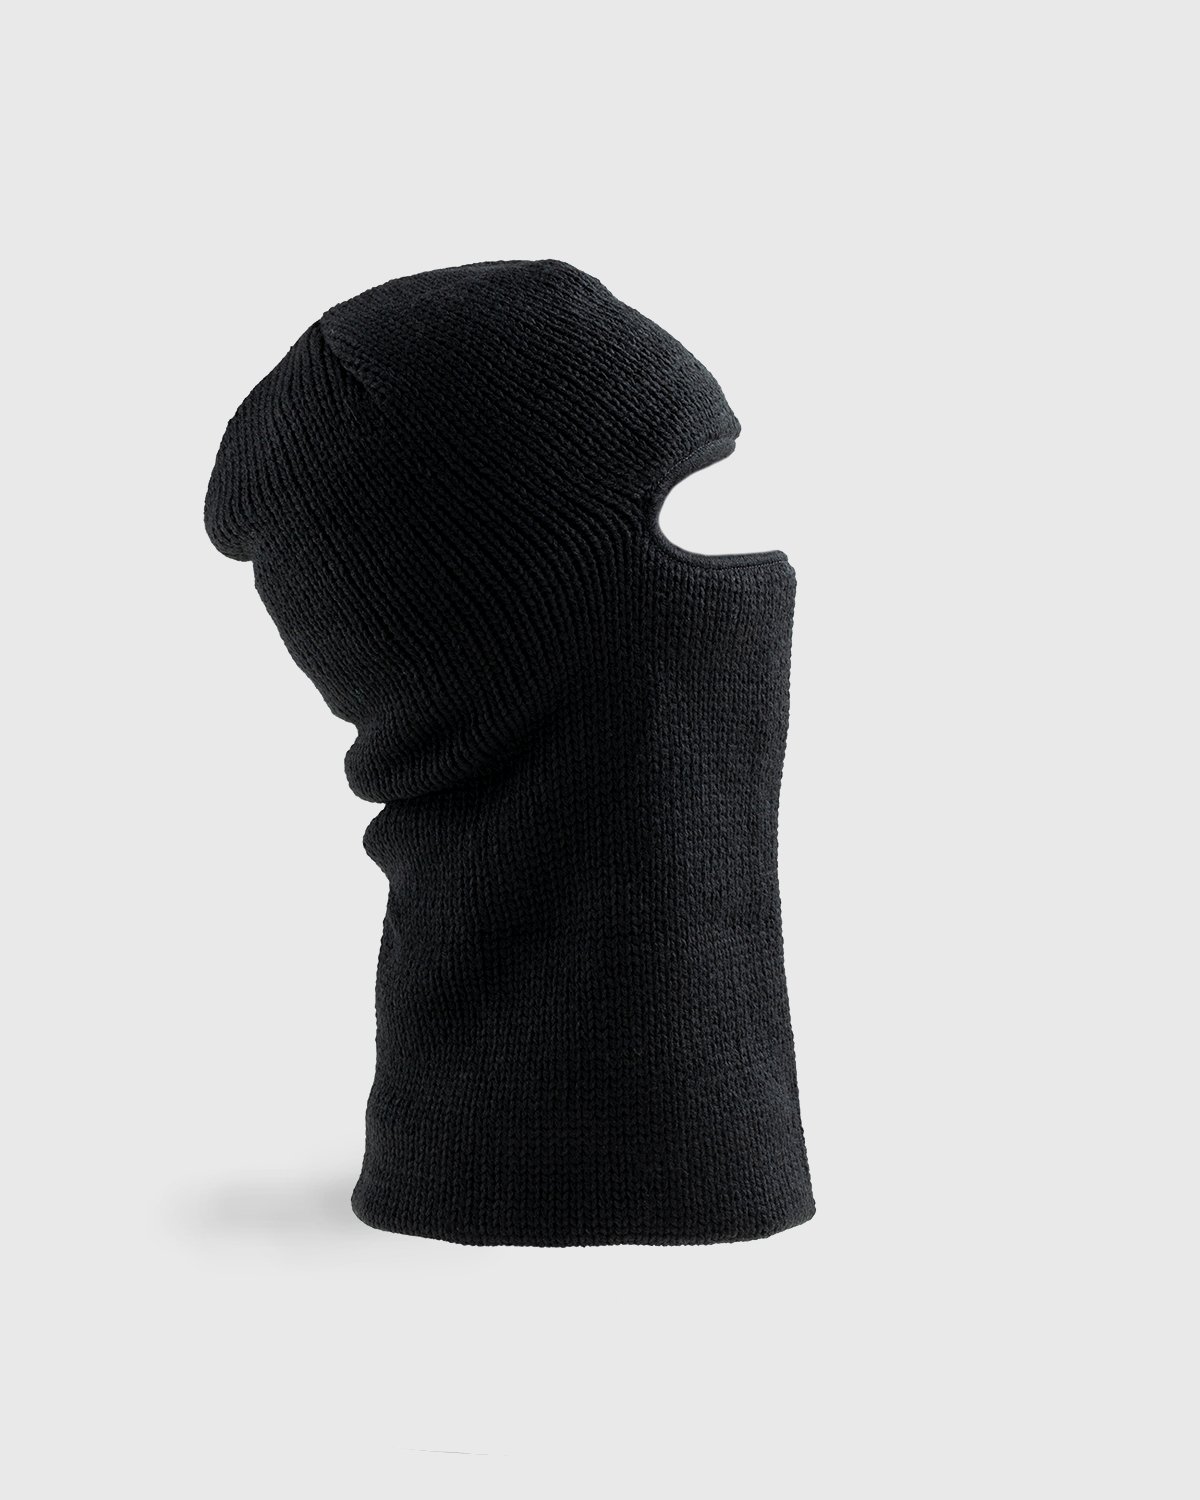 Carhartt WIP - Storm Mask Black - Accessories - Black - Image 3